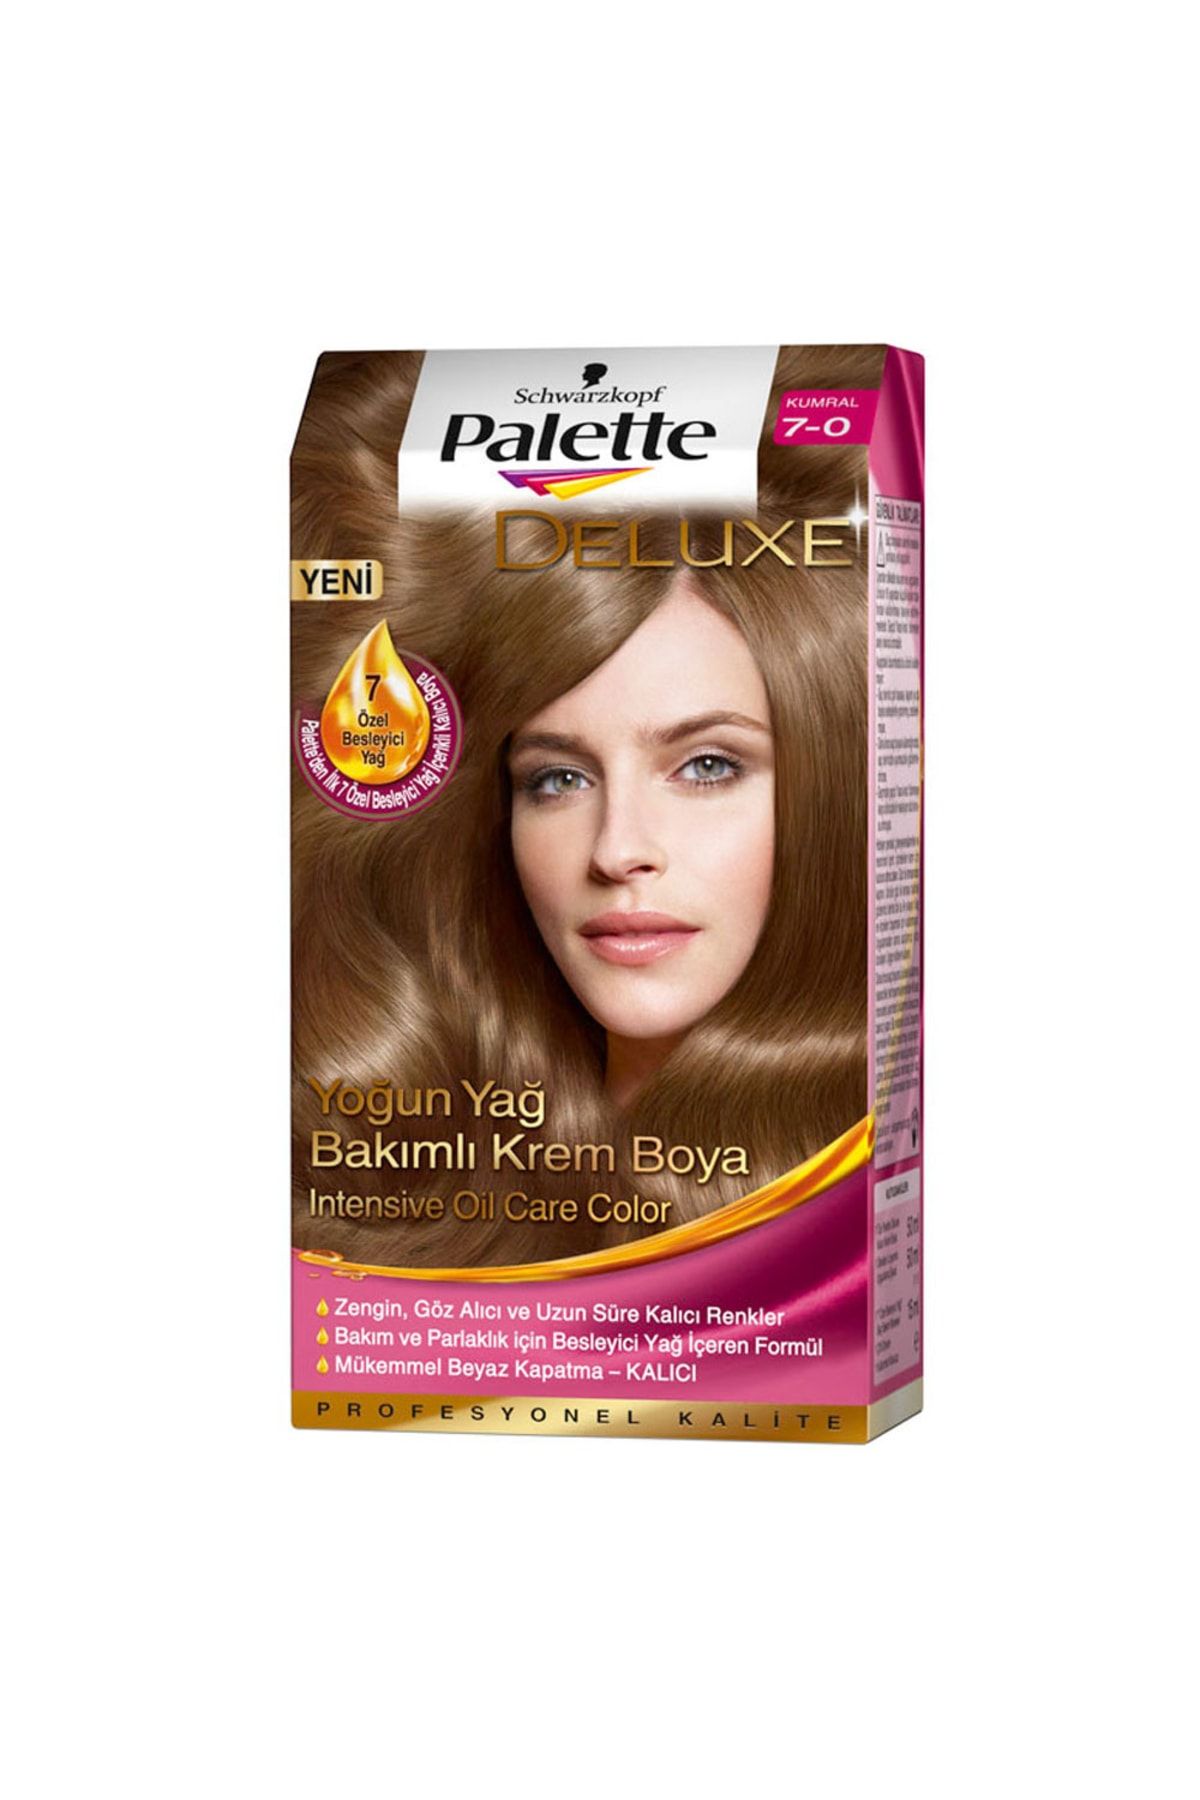 Palette 7-0 Kumral Saç Boyası